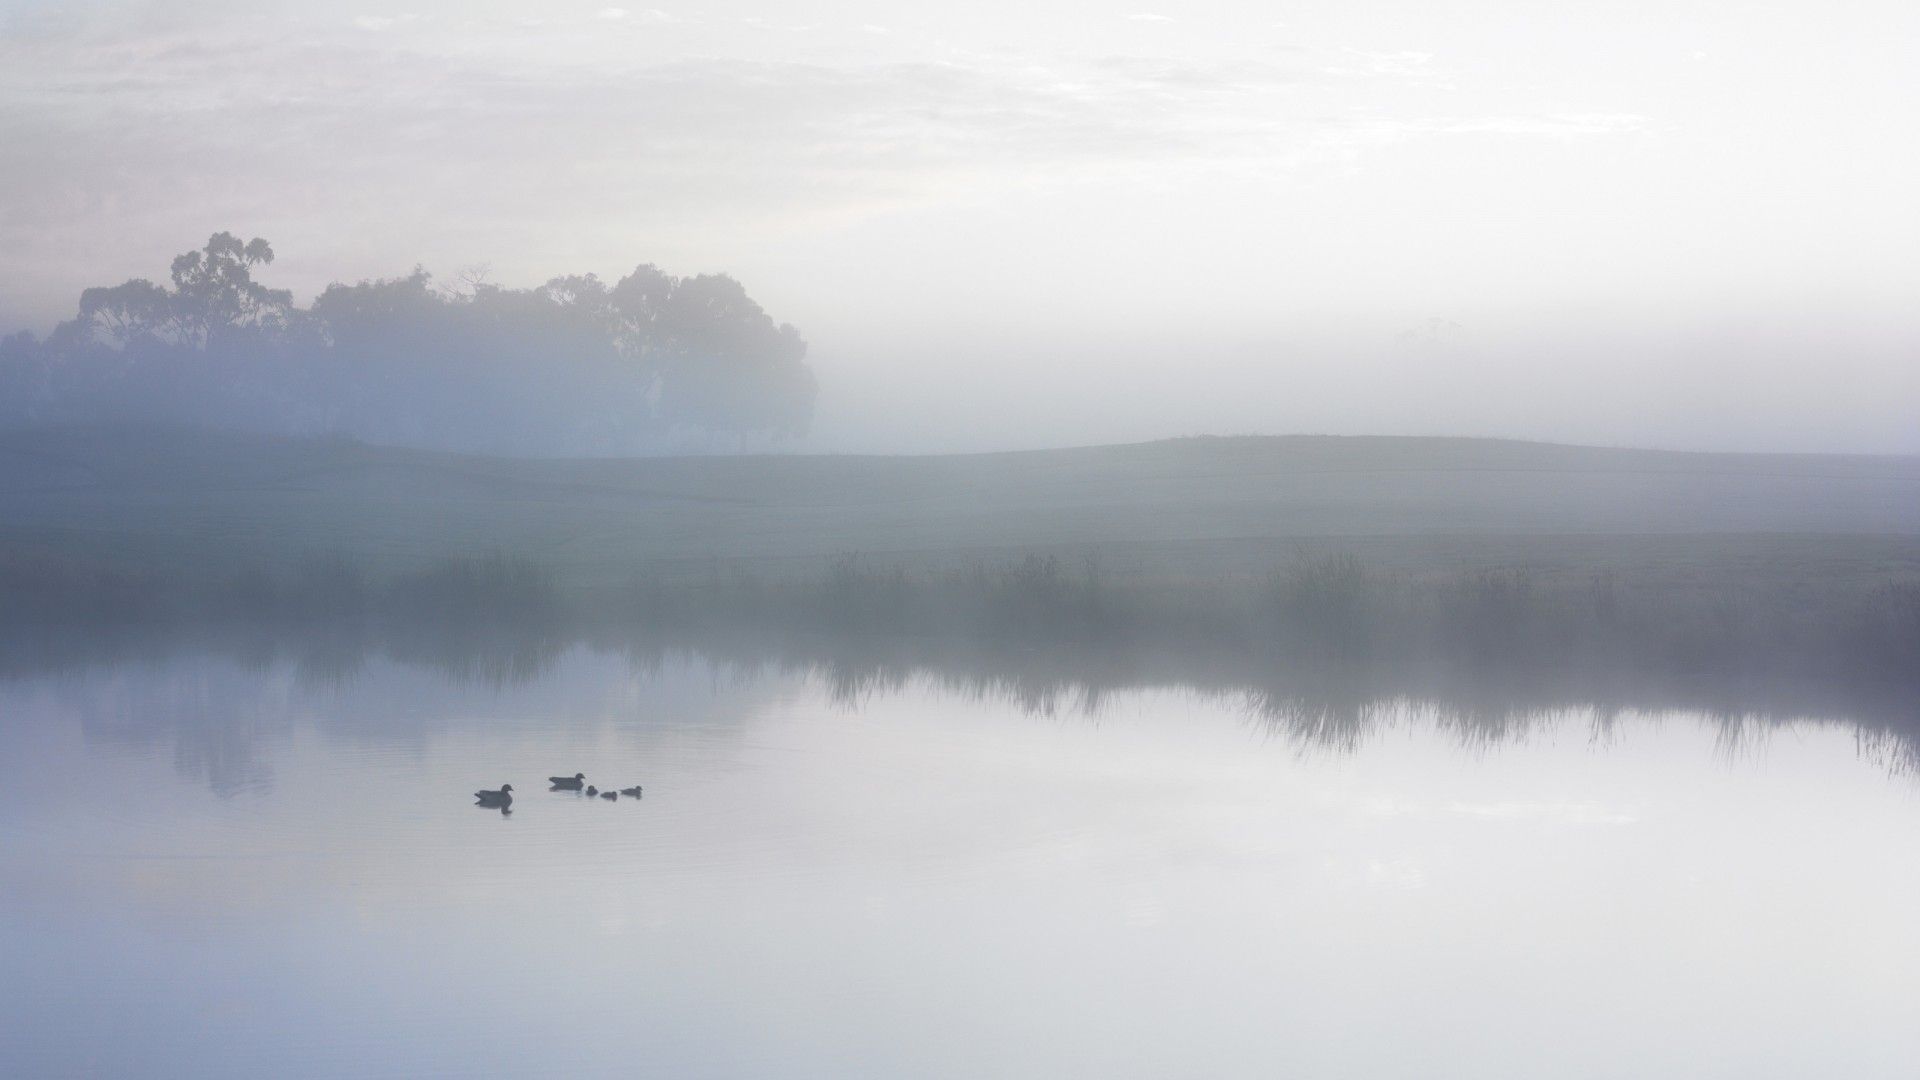 Ducks on a misty pond wallpaper - HD Wallpapers